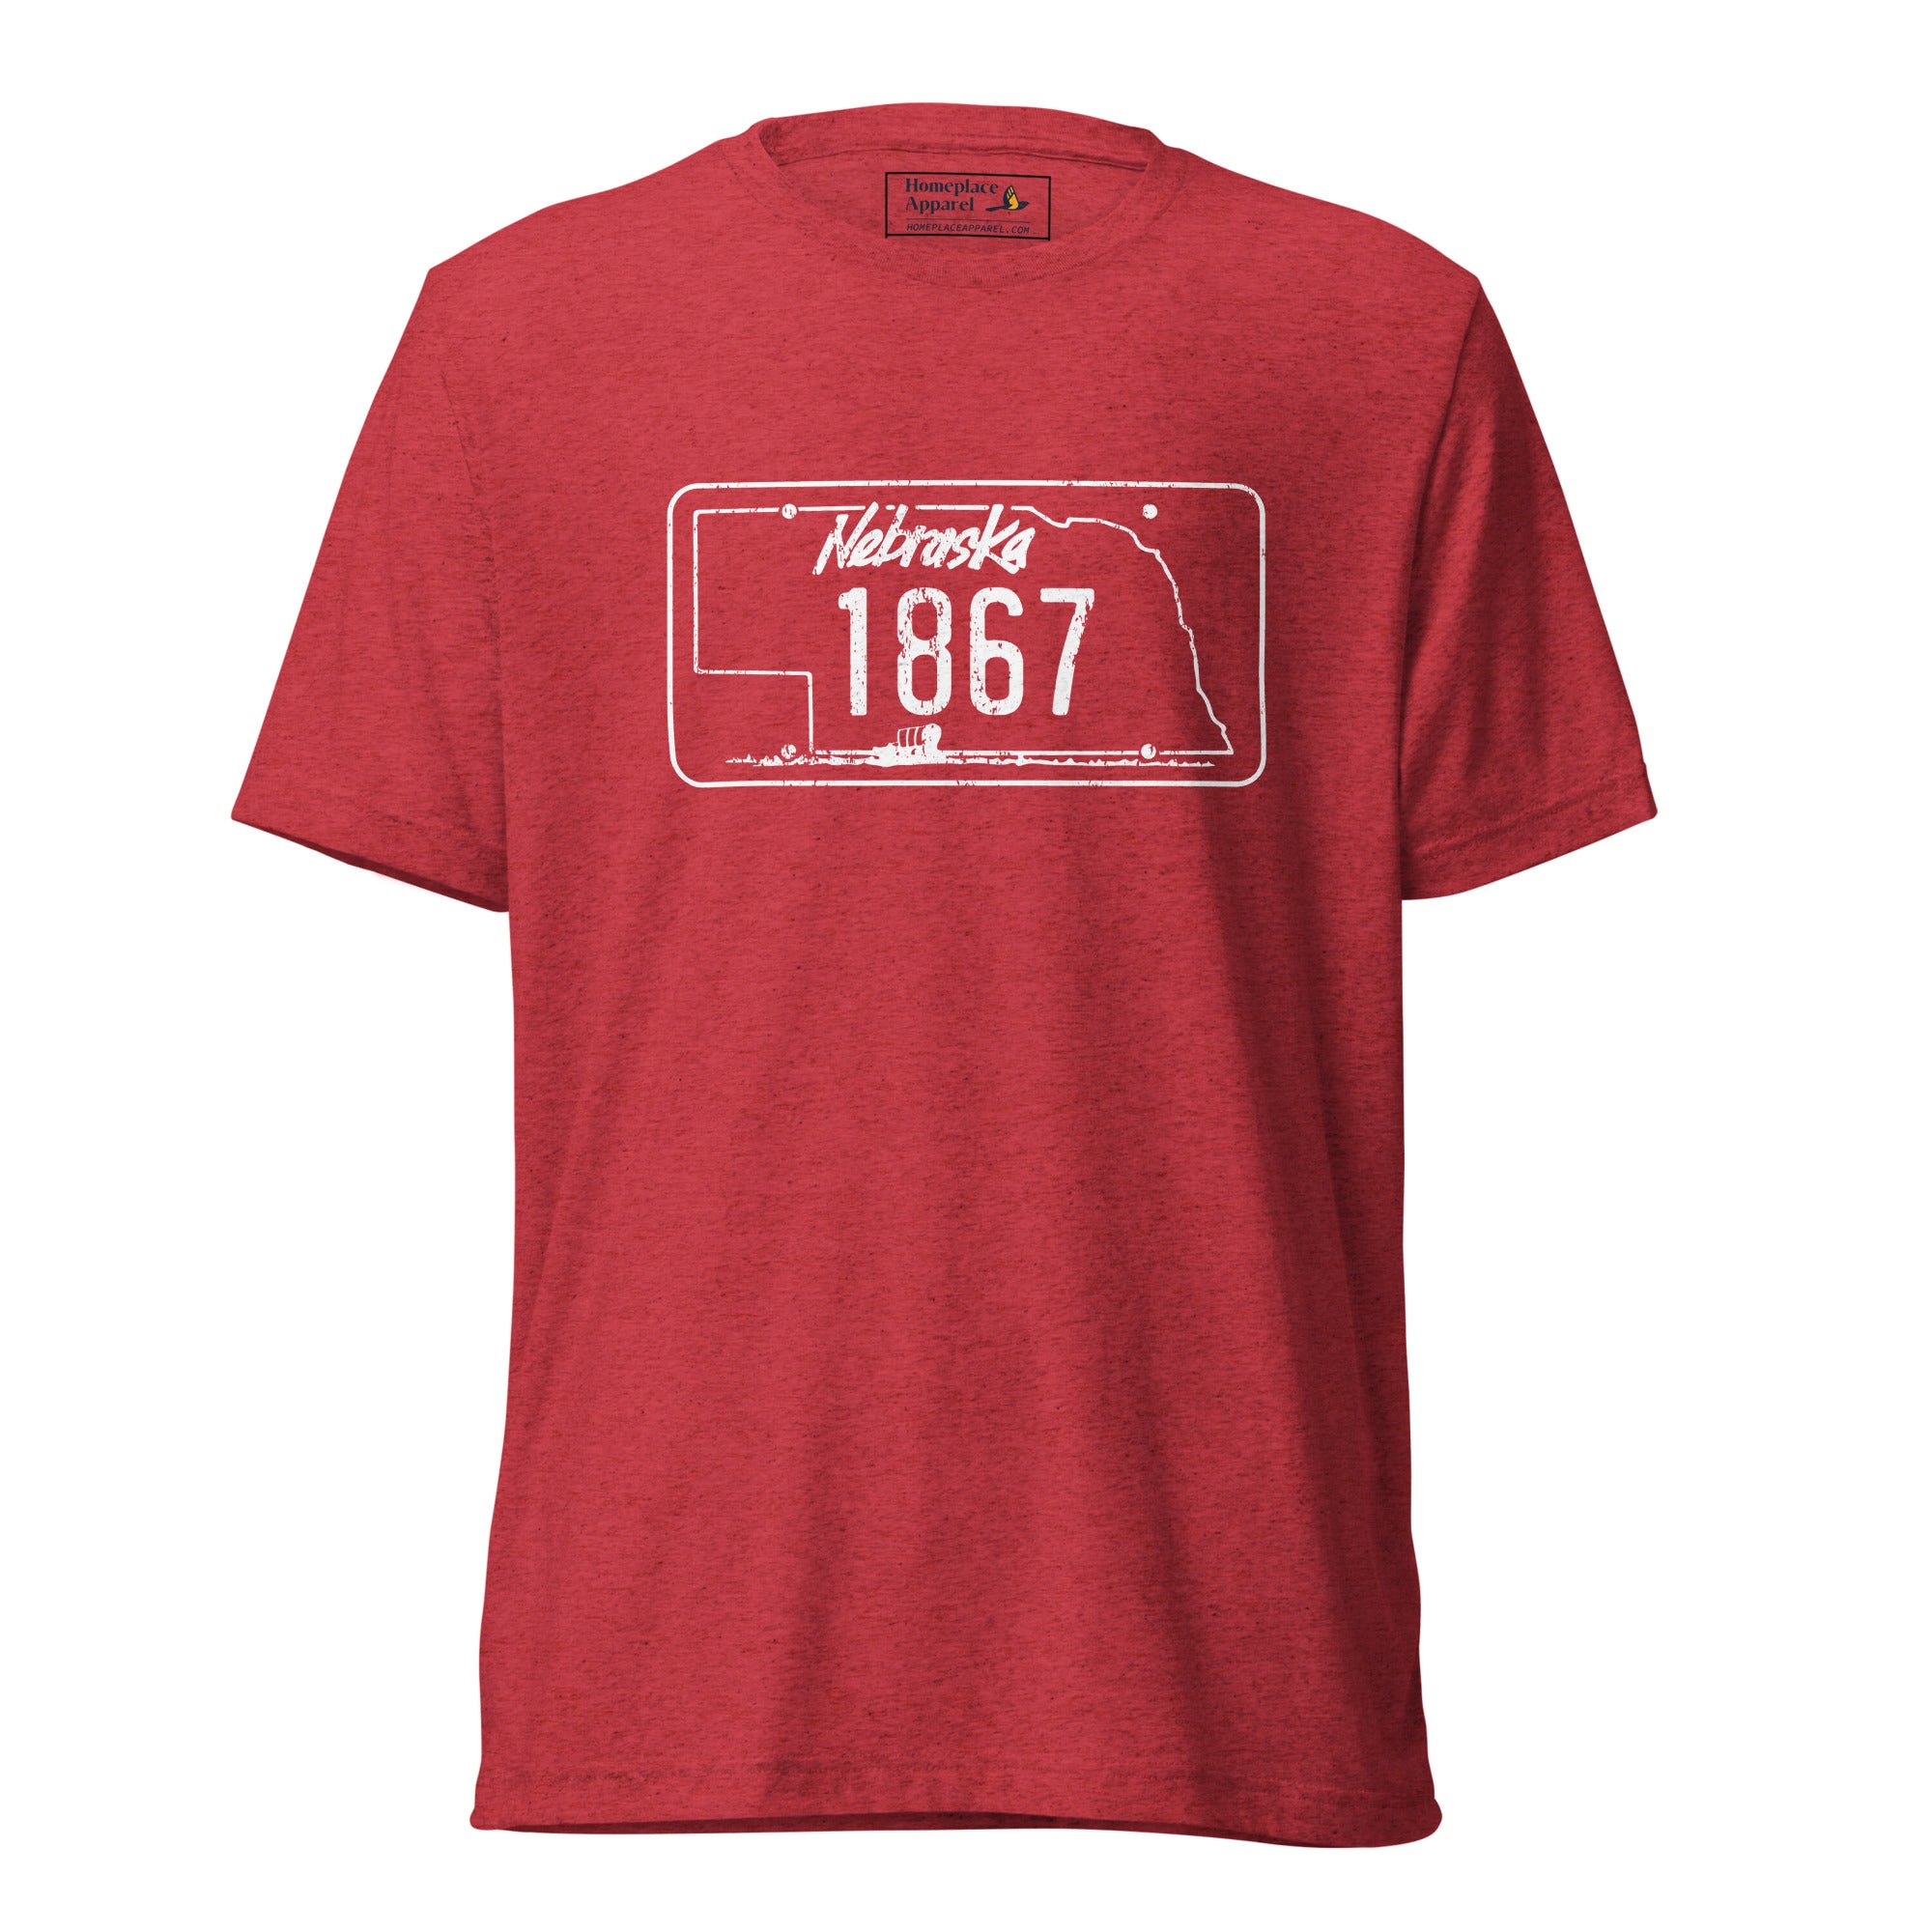 unisex-tri-blend-t-shirt-red-triblend-front-650e2a7ae53fa.jpg